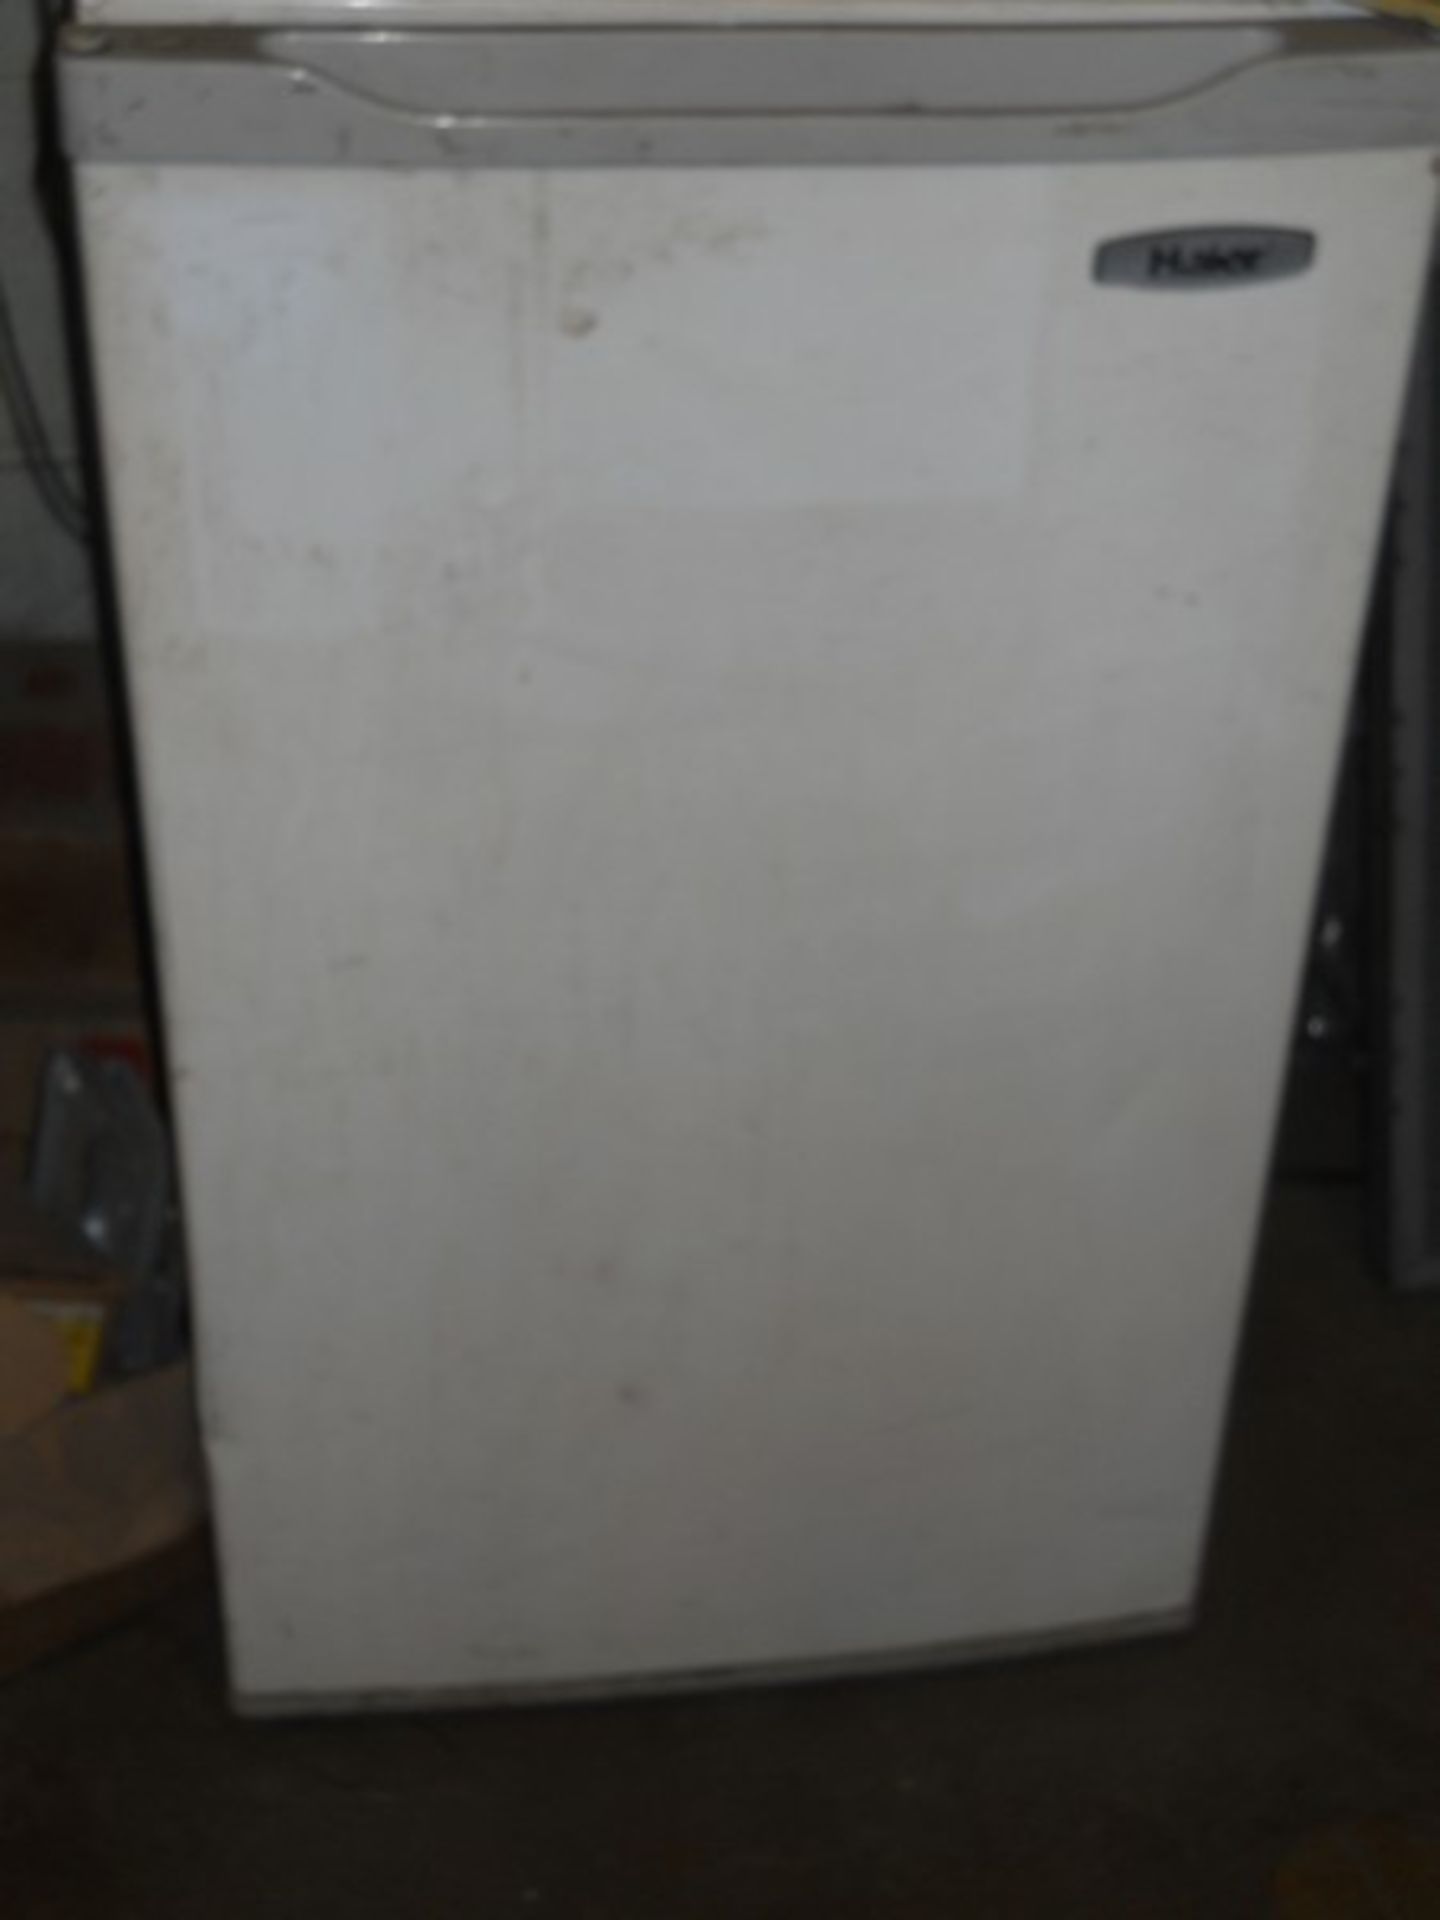 Lot - Lathem Time Clock; (1) Haier Single Door Refrigerator - Image 3 of 3